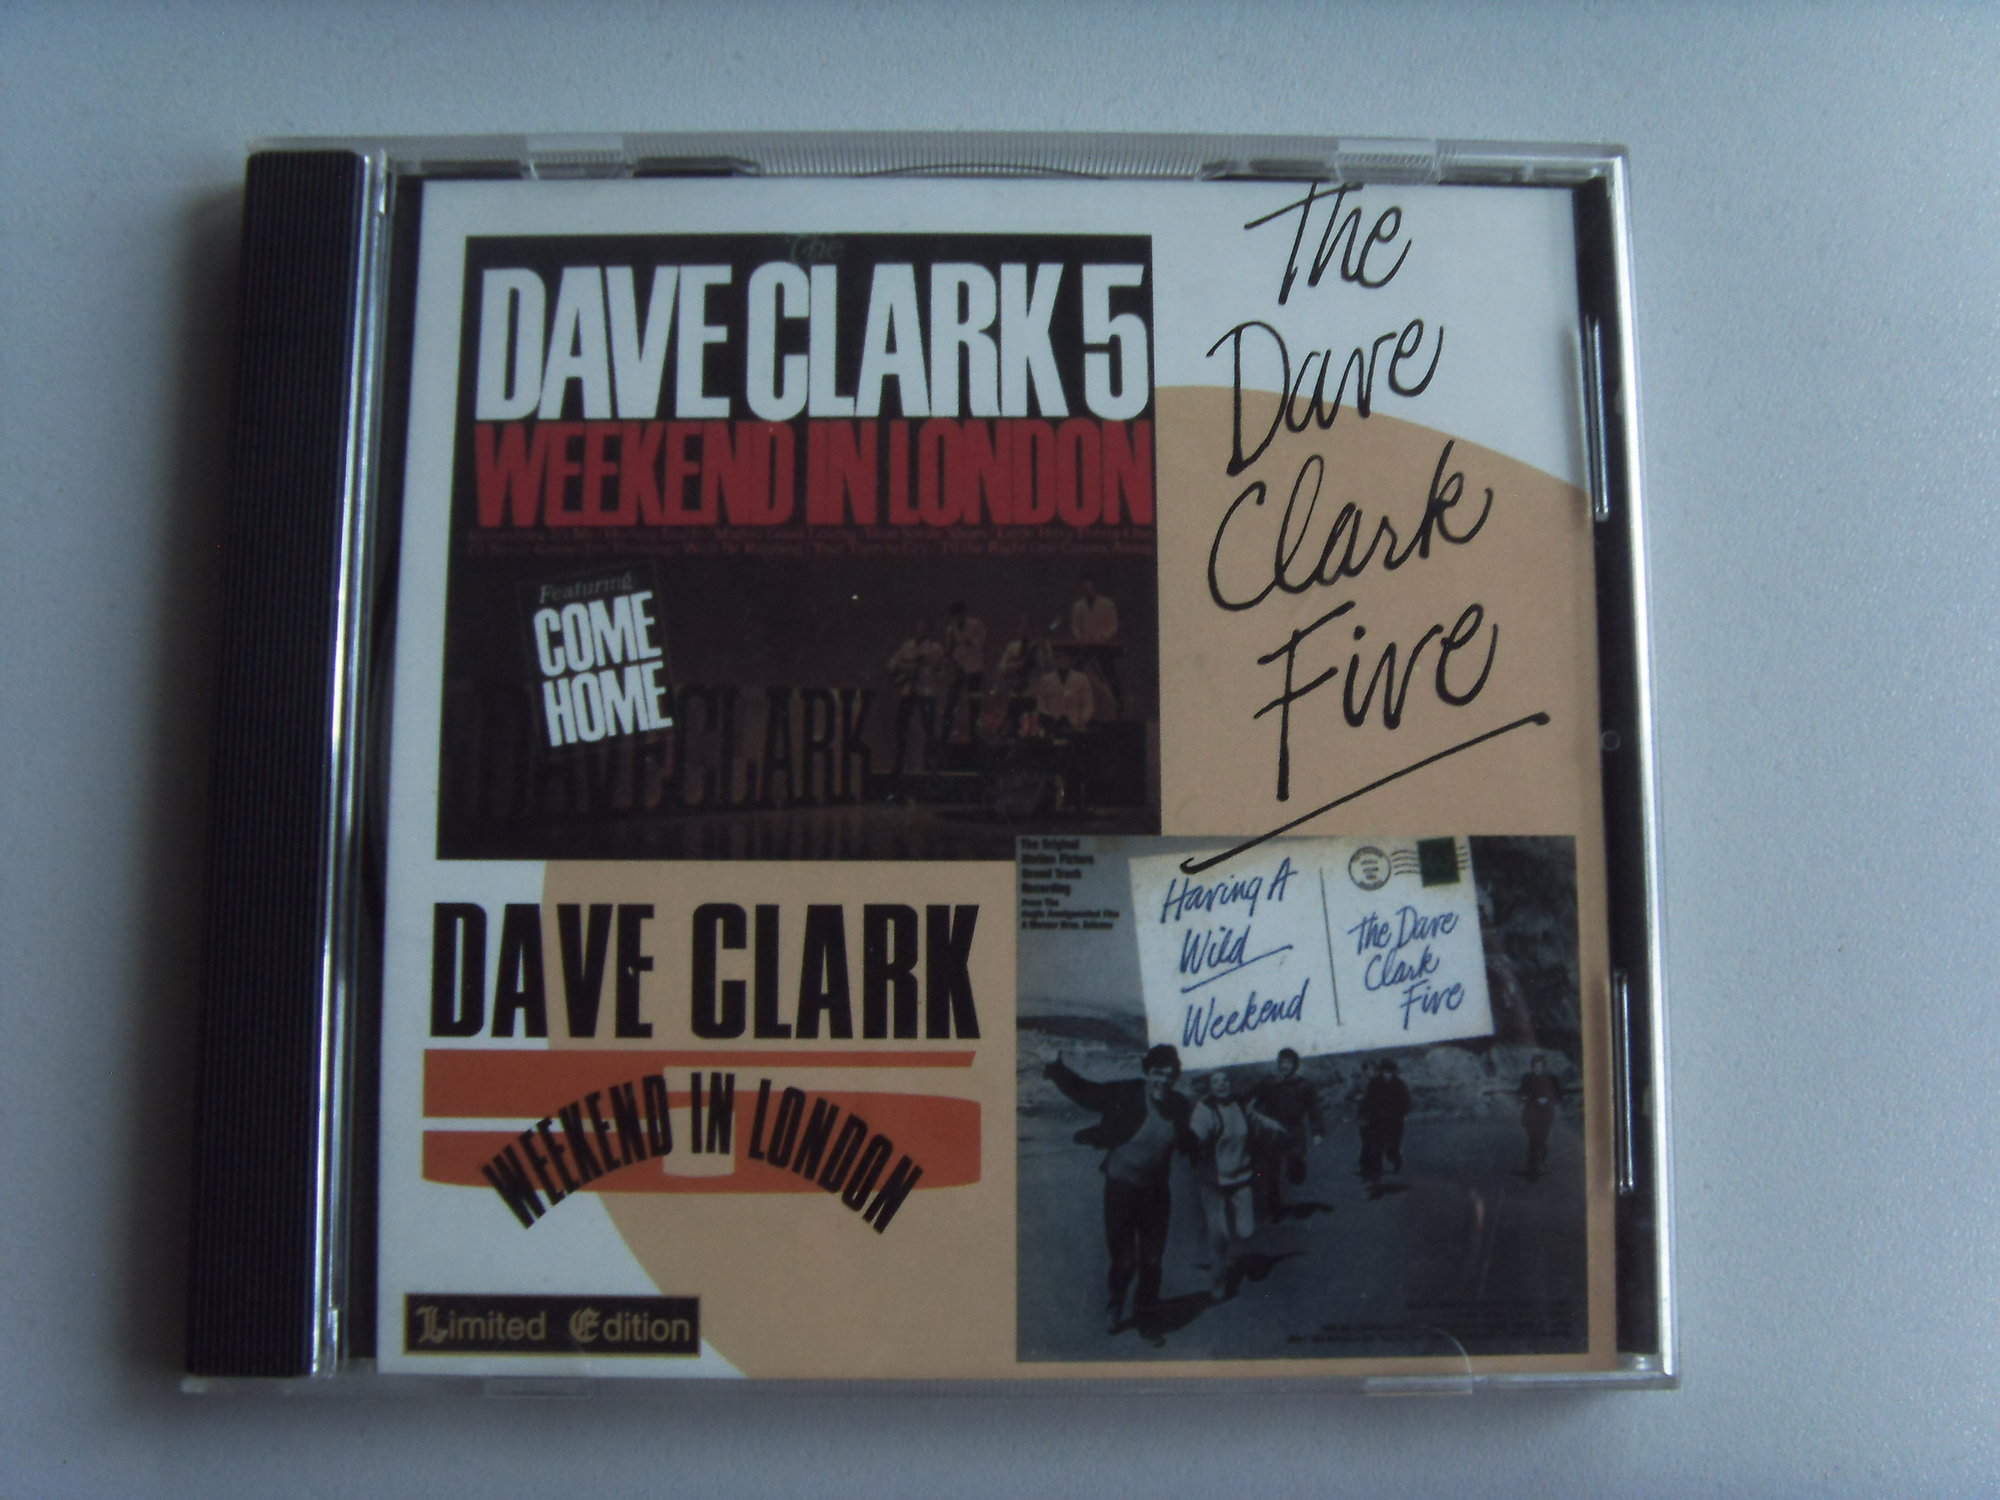 DAVE CLARK 5 Weekend in London / Having a wild wekend